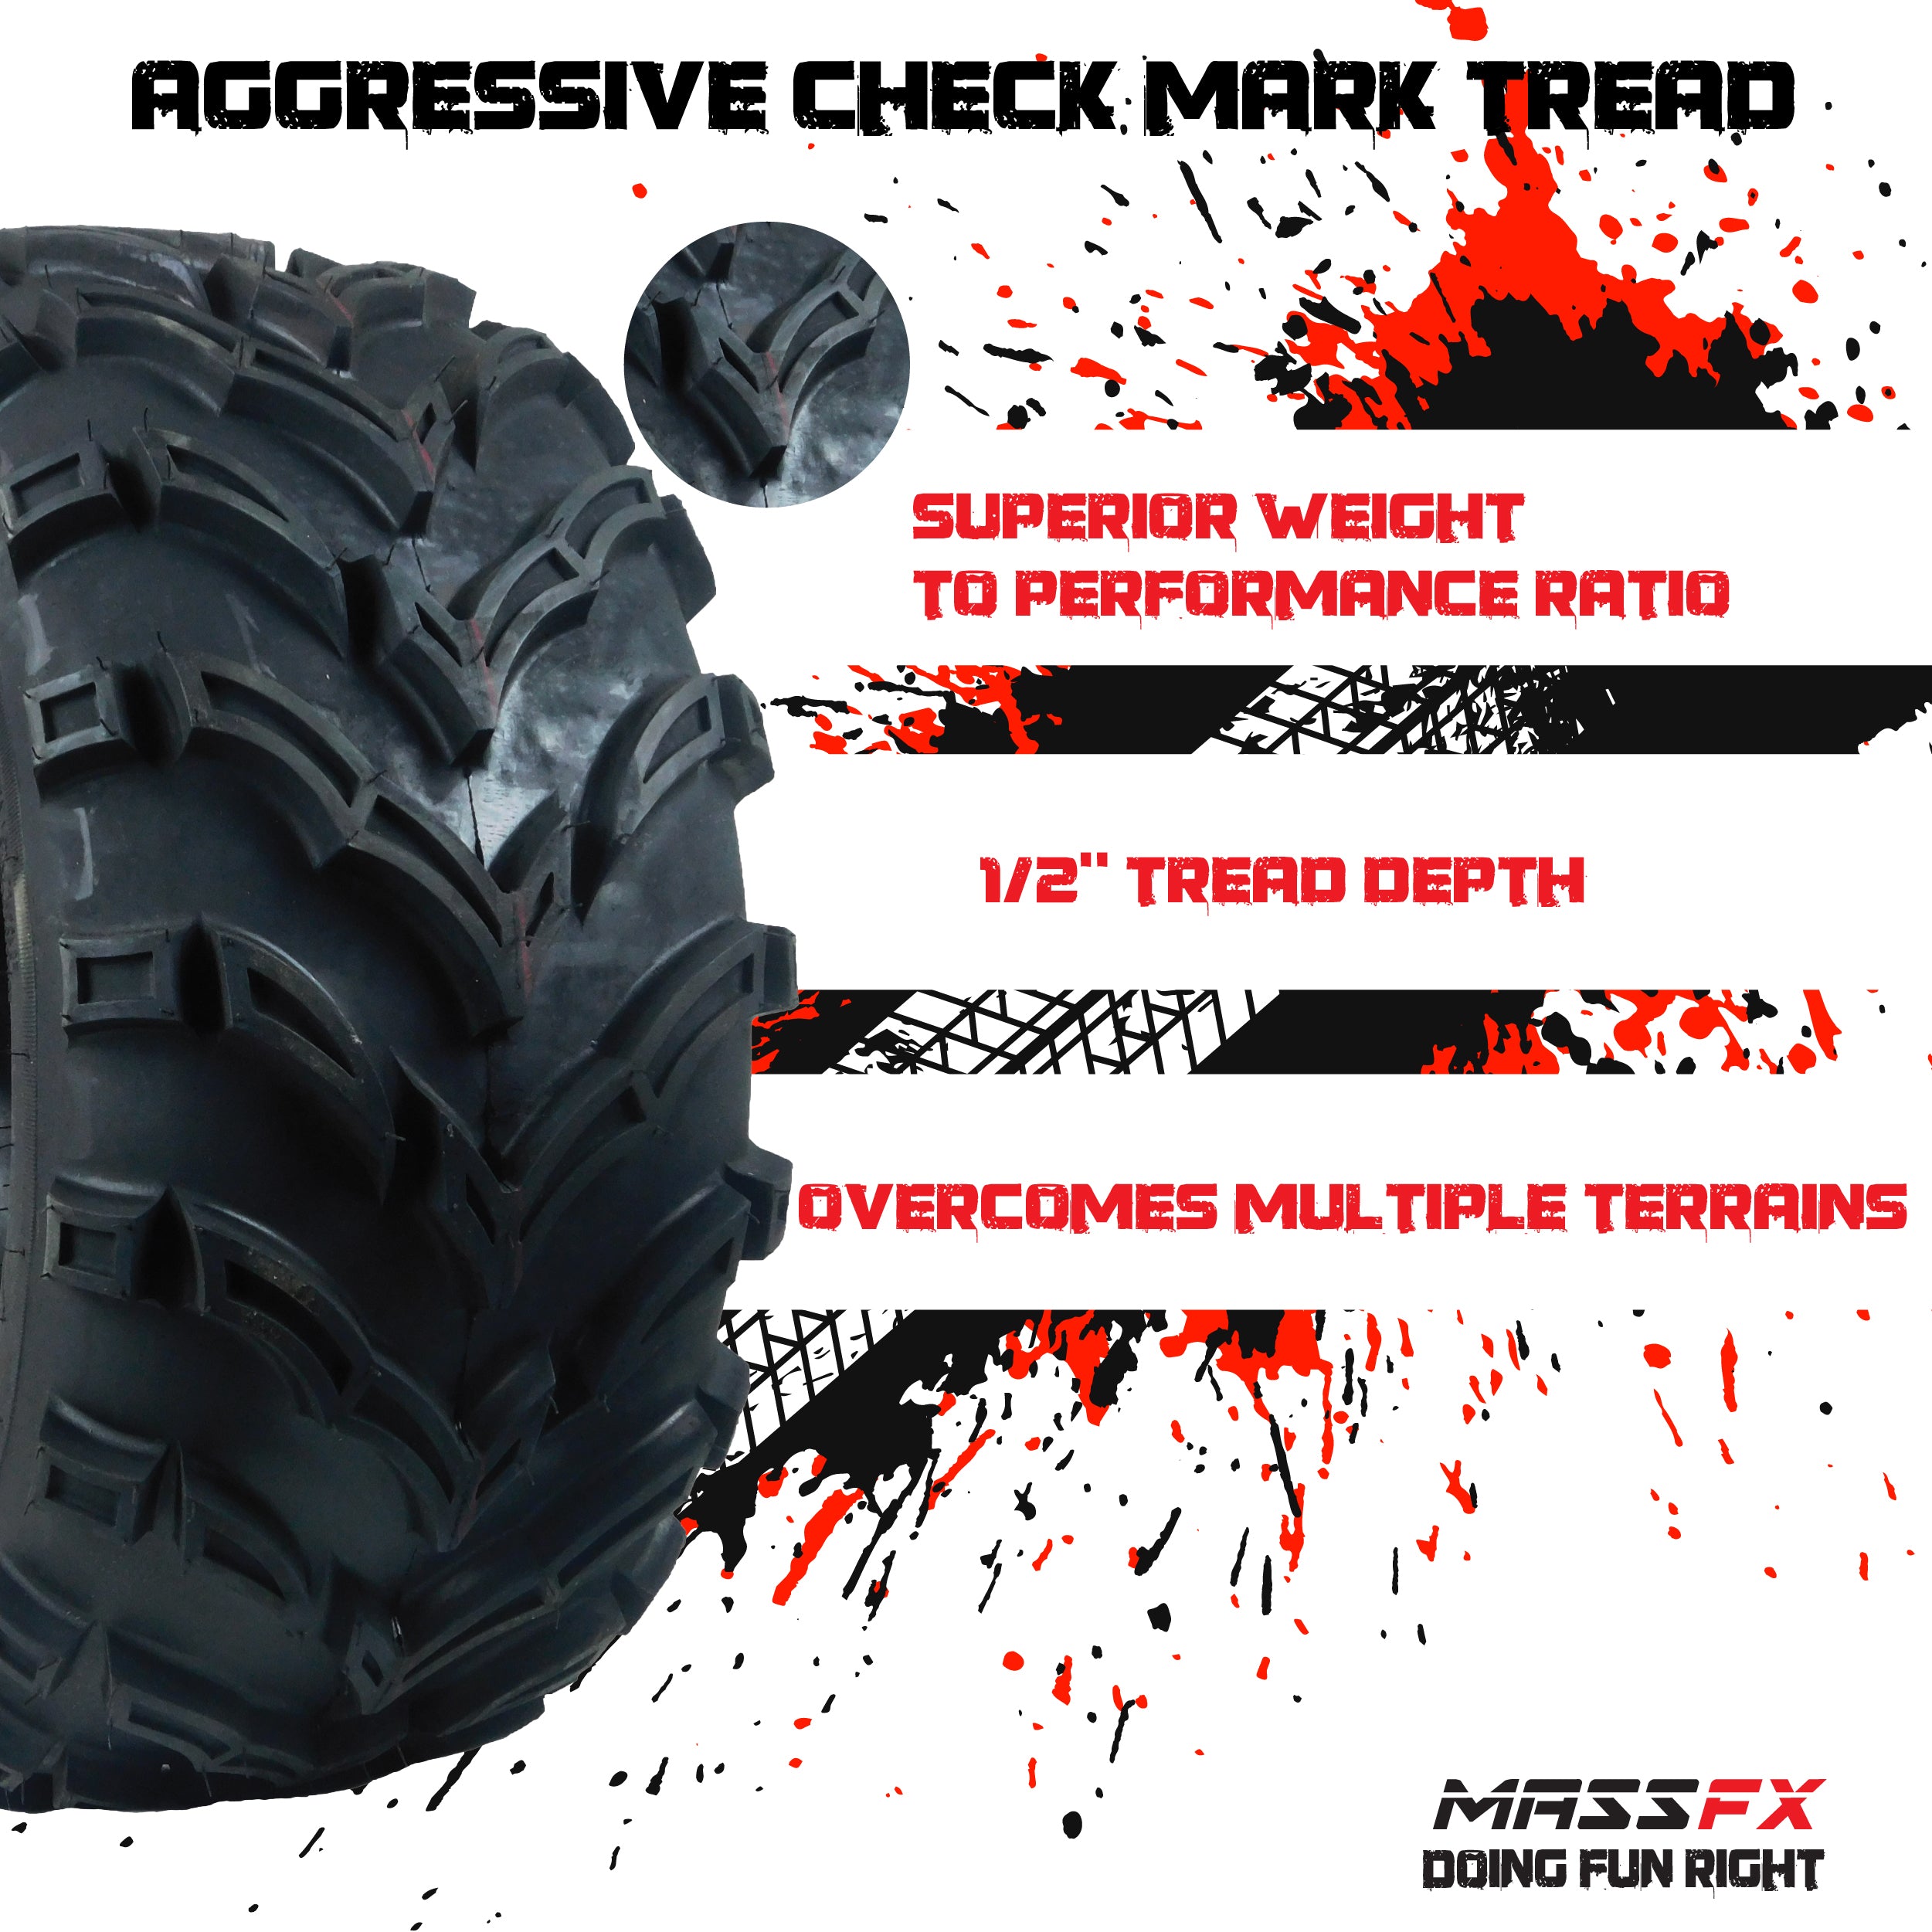 MASSFX ATV MS Tire 2 set 26x9-12 Front 6Ply